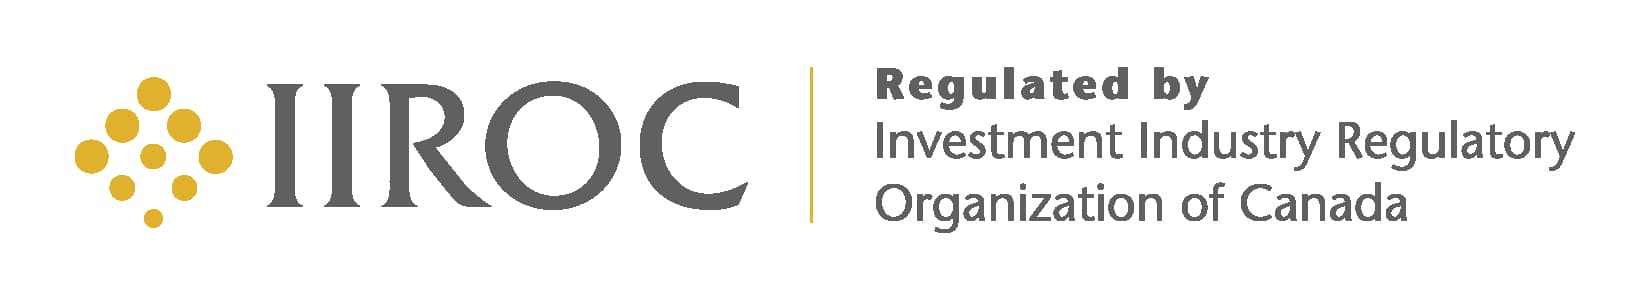 IIROC logo Regulated by Investment Industry Regulatory Organization of Canada